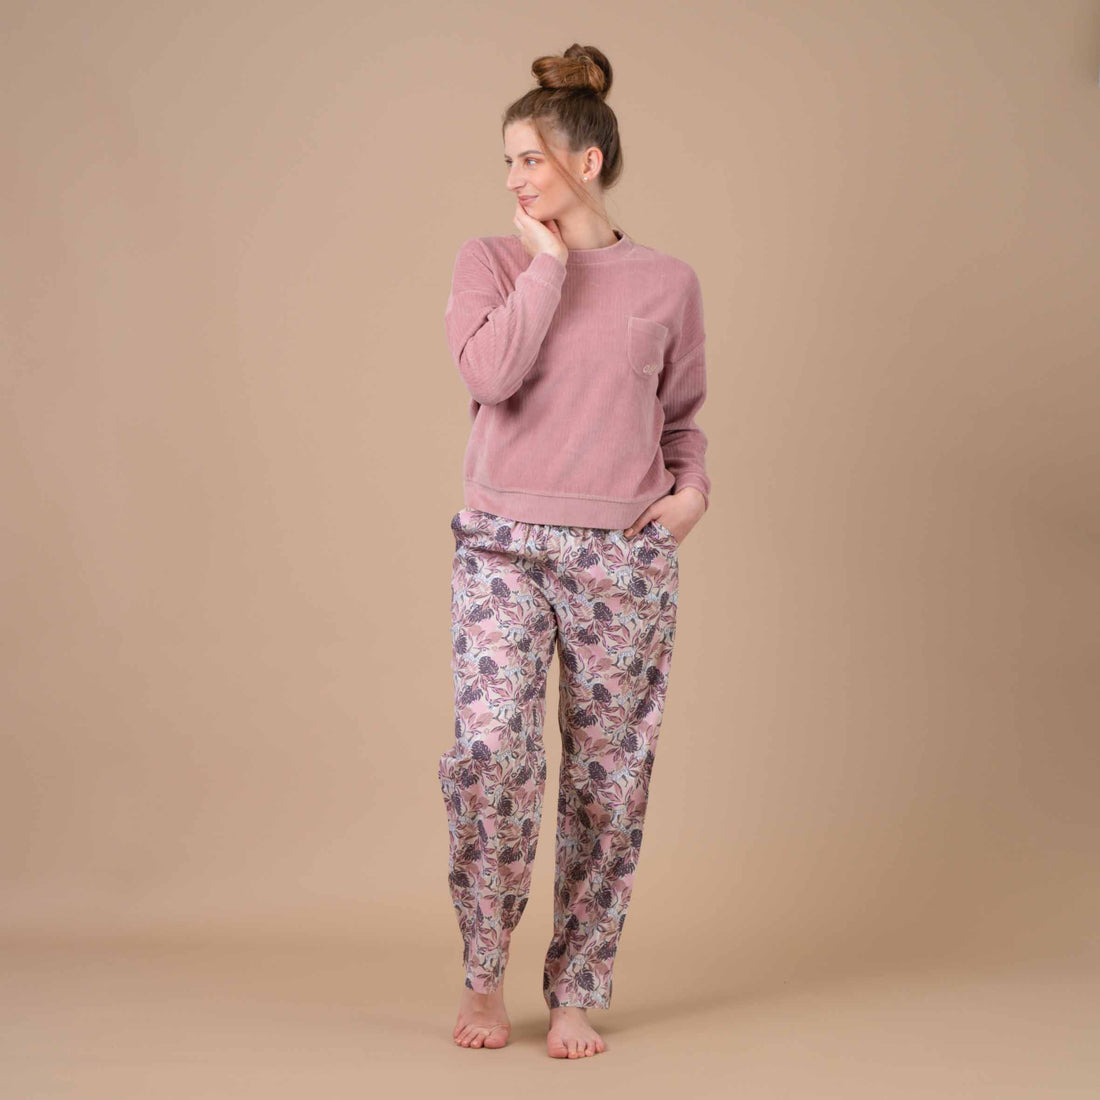 Le Pyjama Femme – Mariner underwear